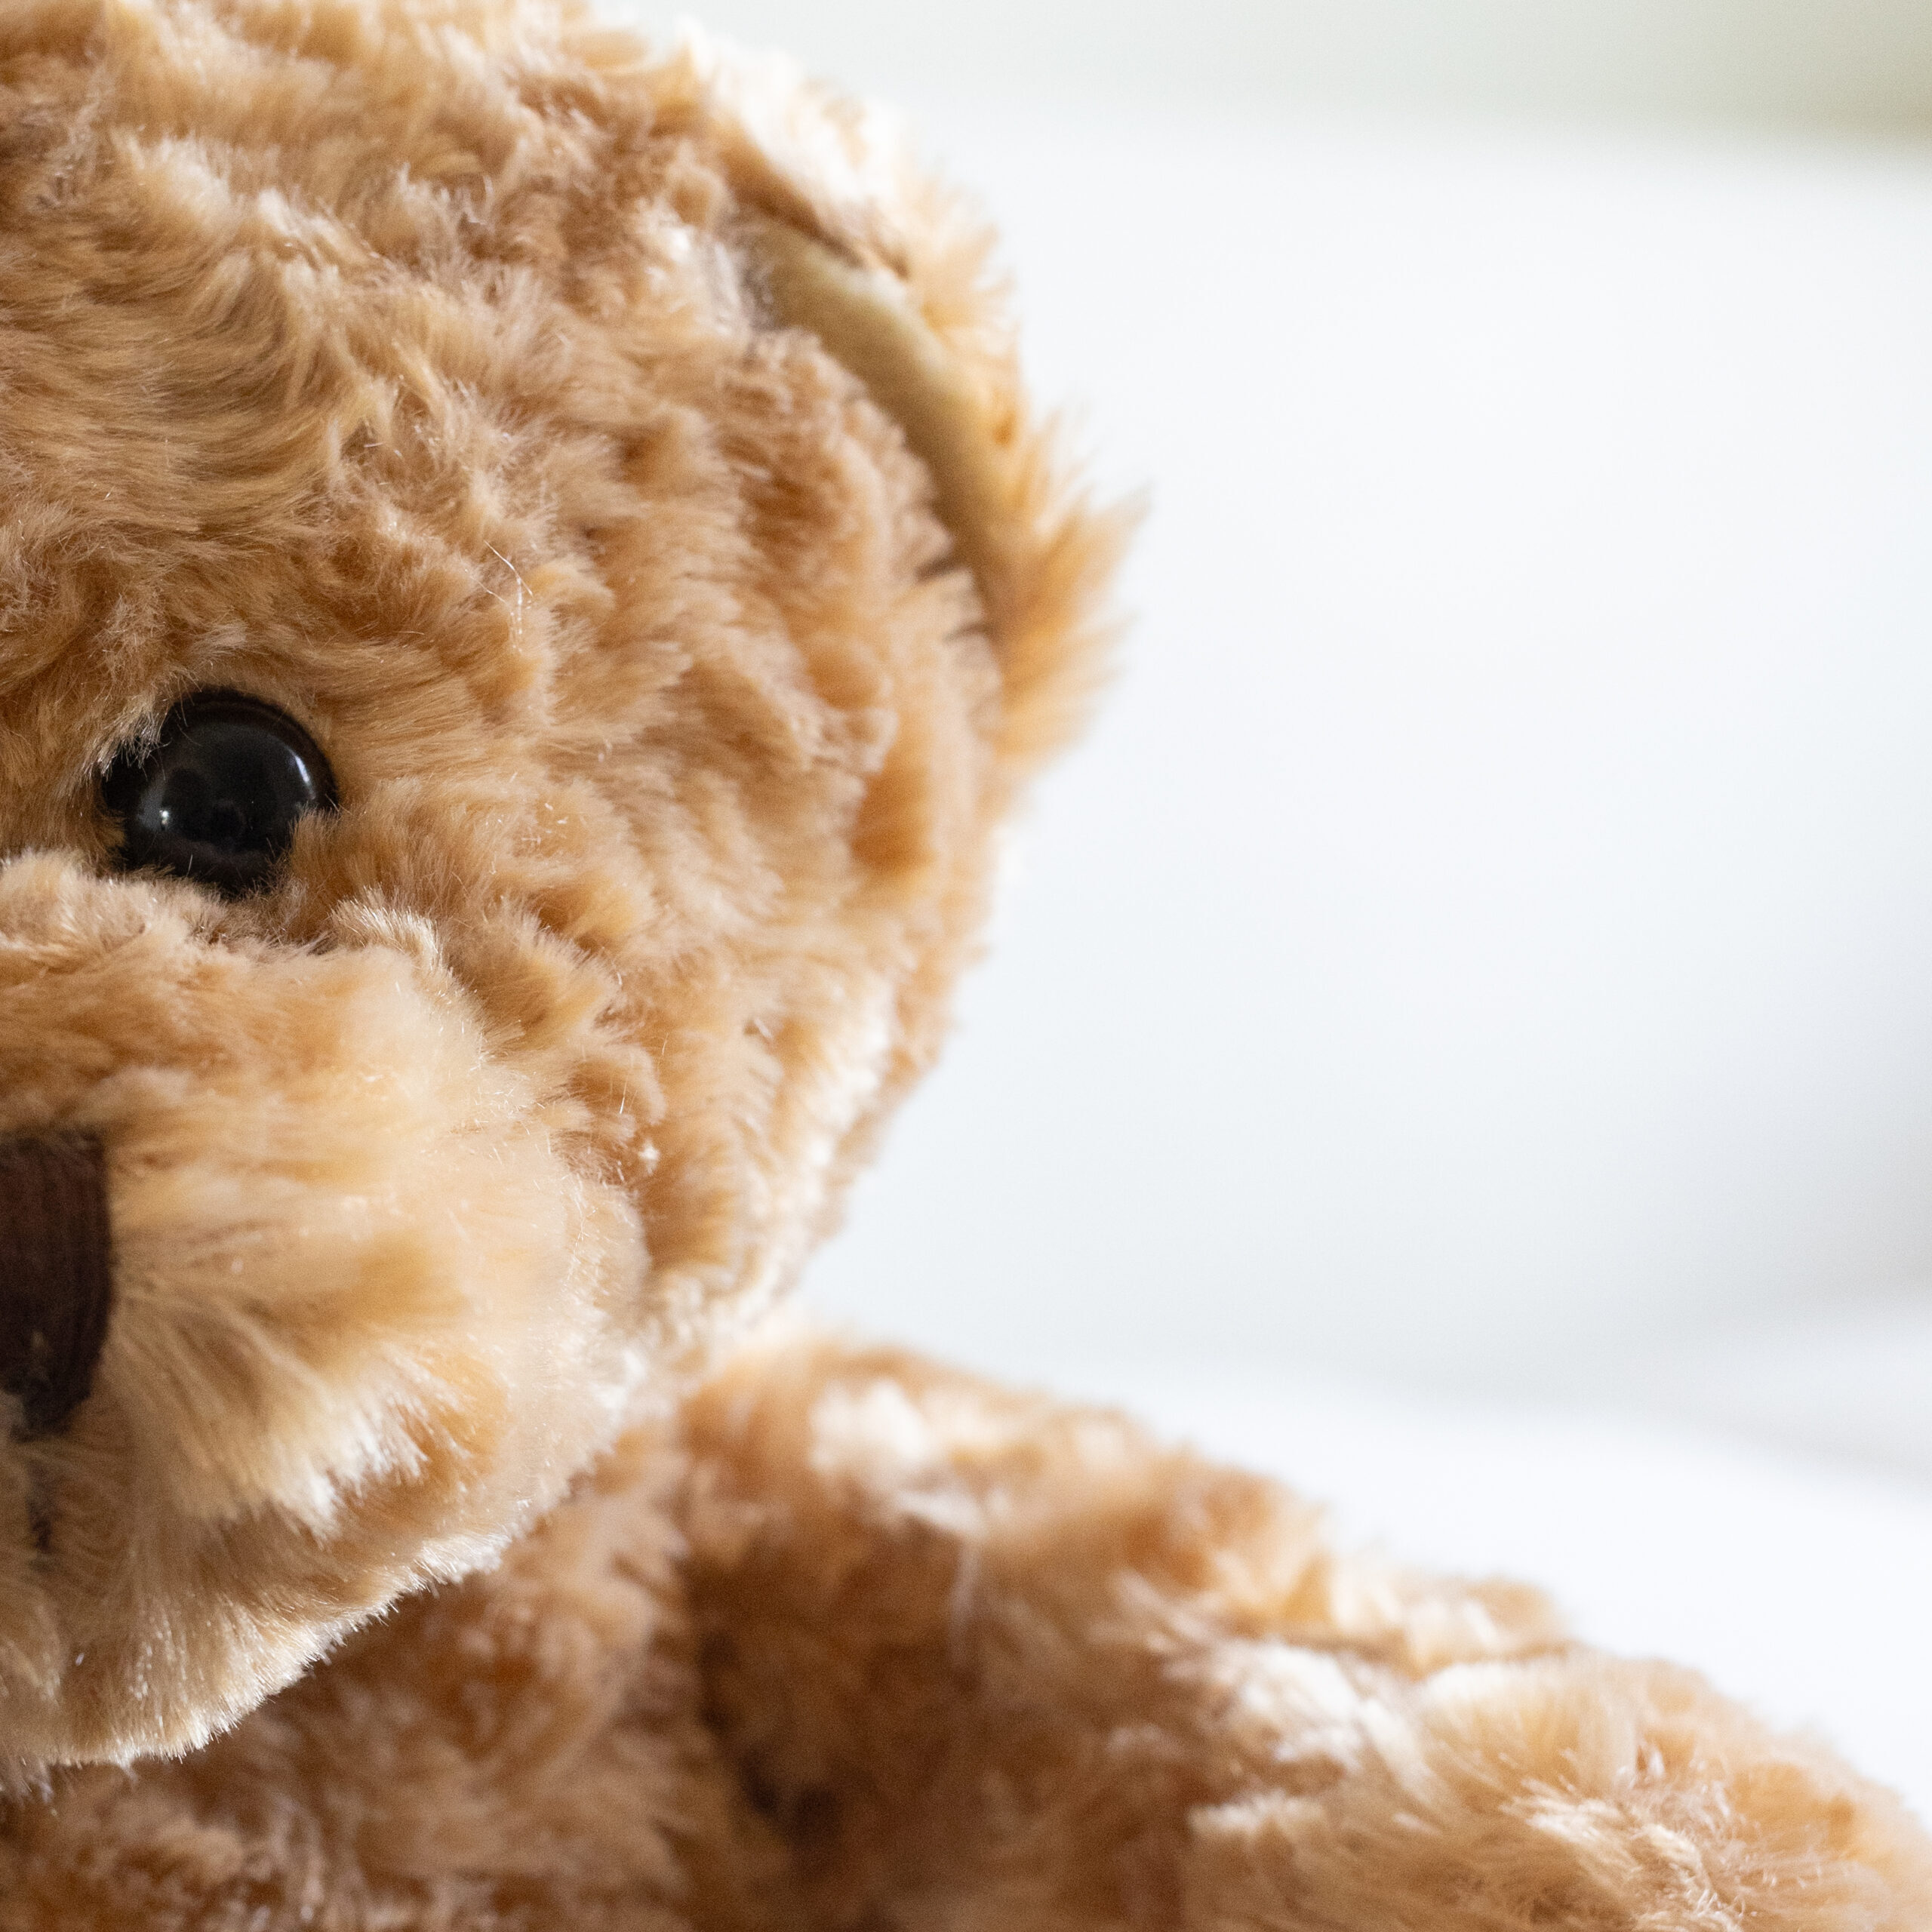 a close up of a plush brown teddy bear